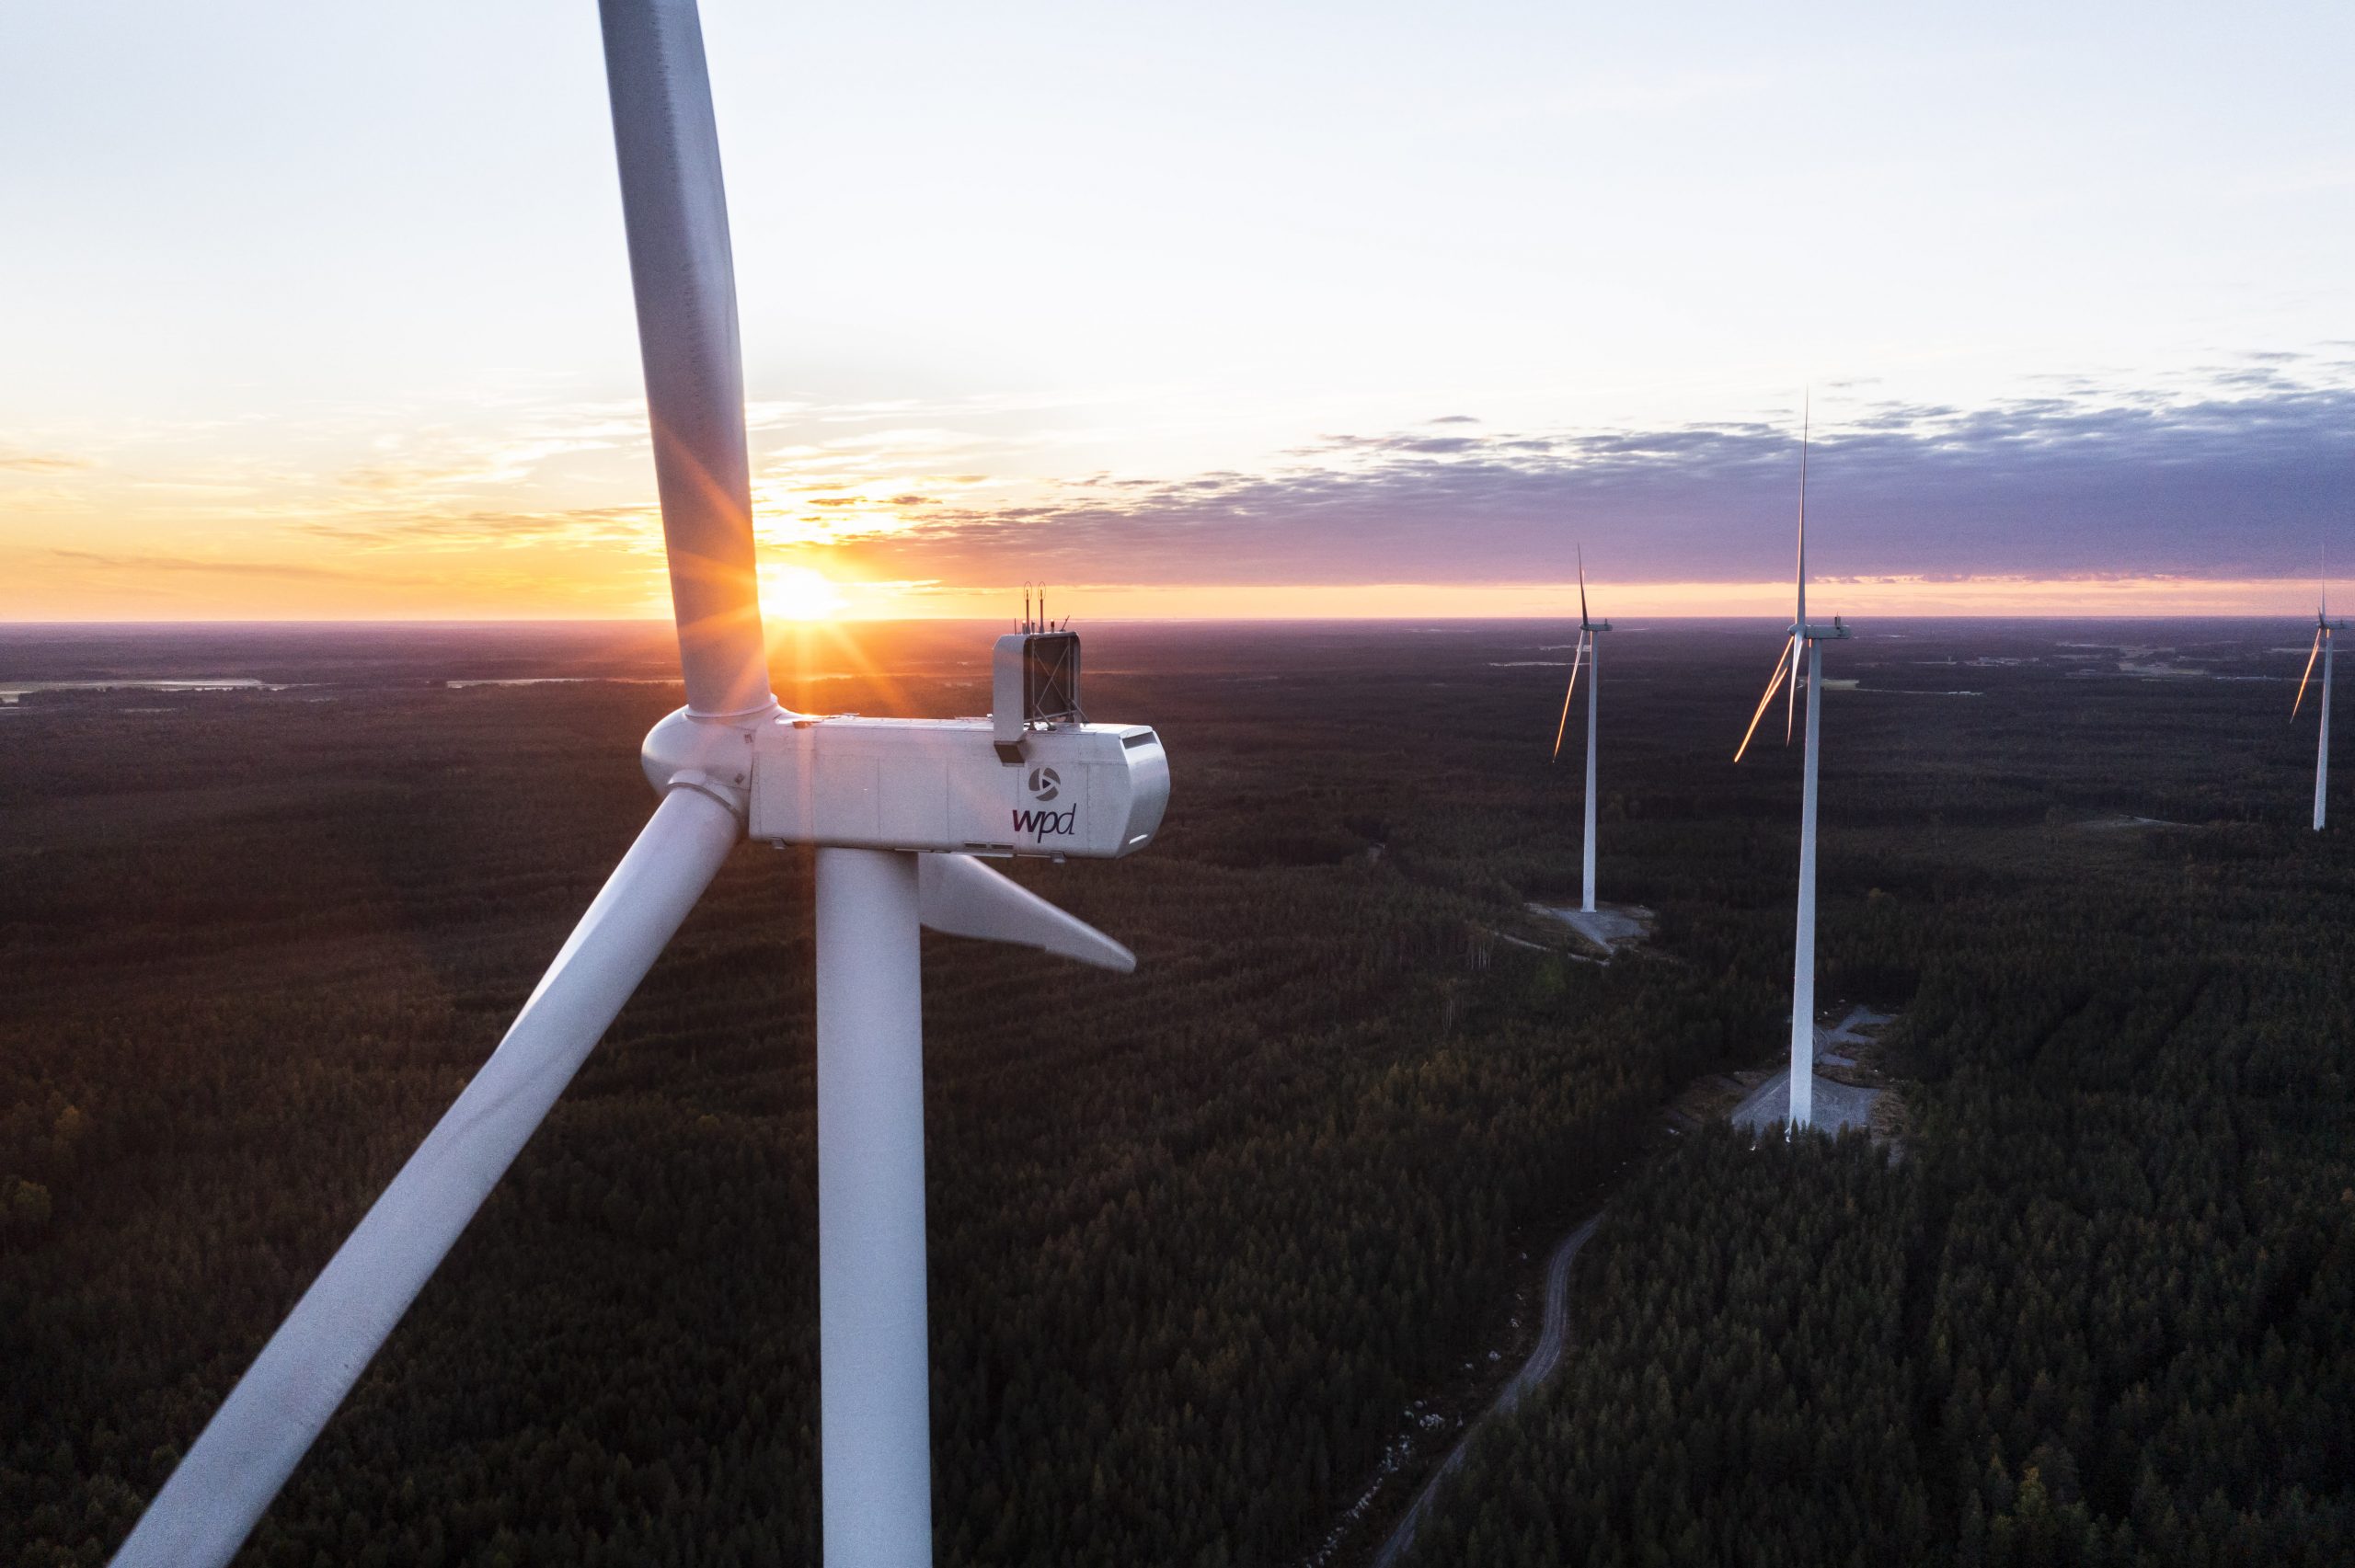 Image of windfarm near Kannus, Finland.